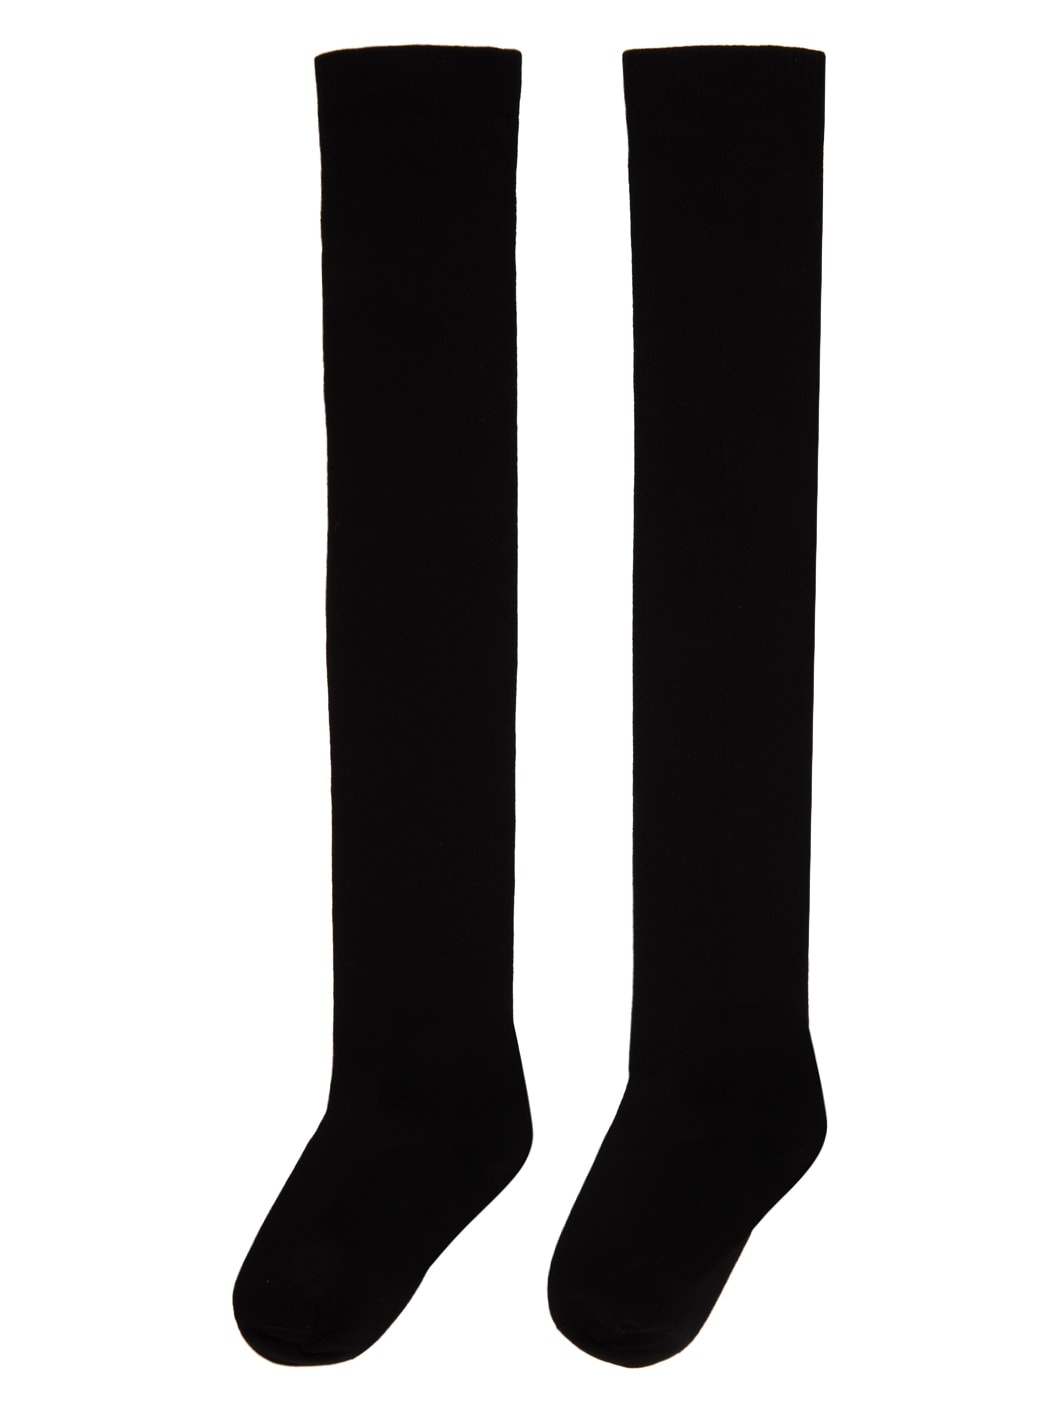 Black Semi-Sheer Socks - 2